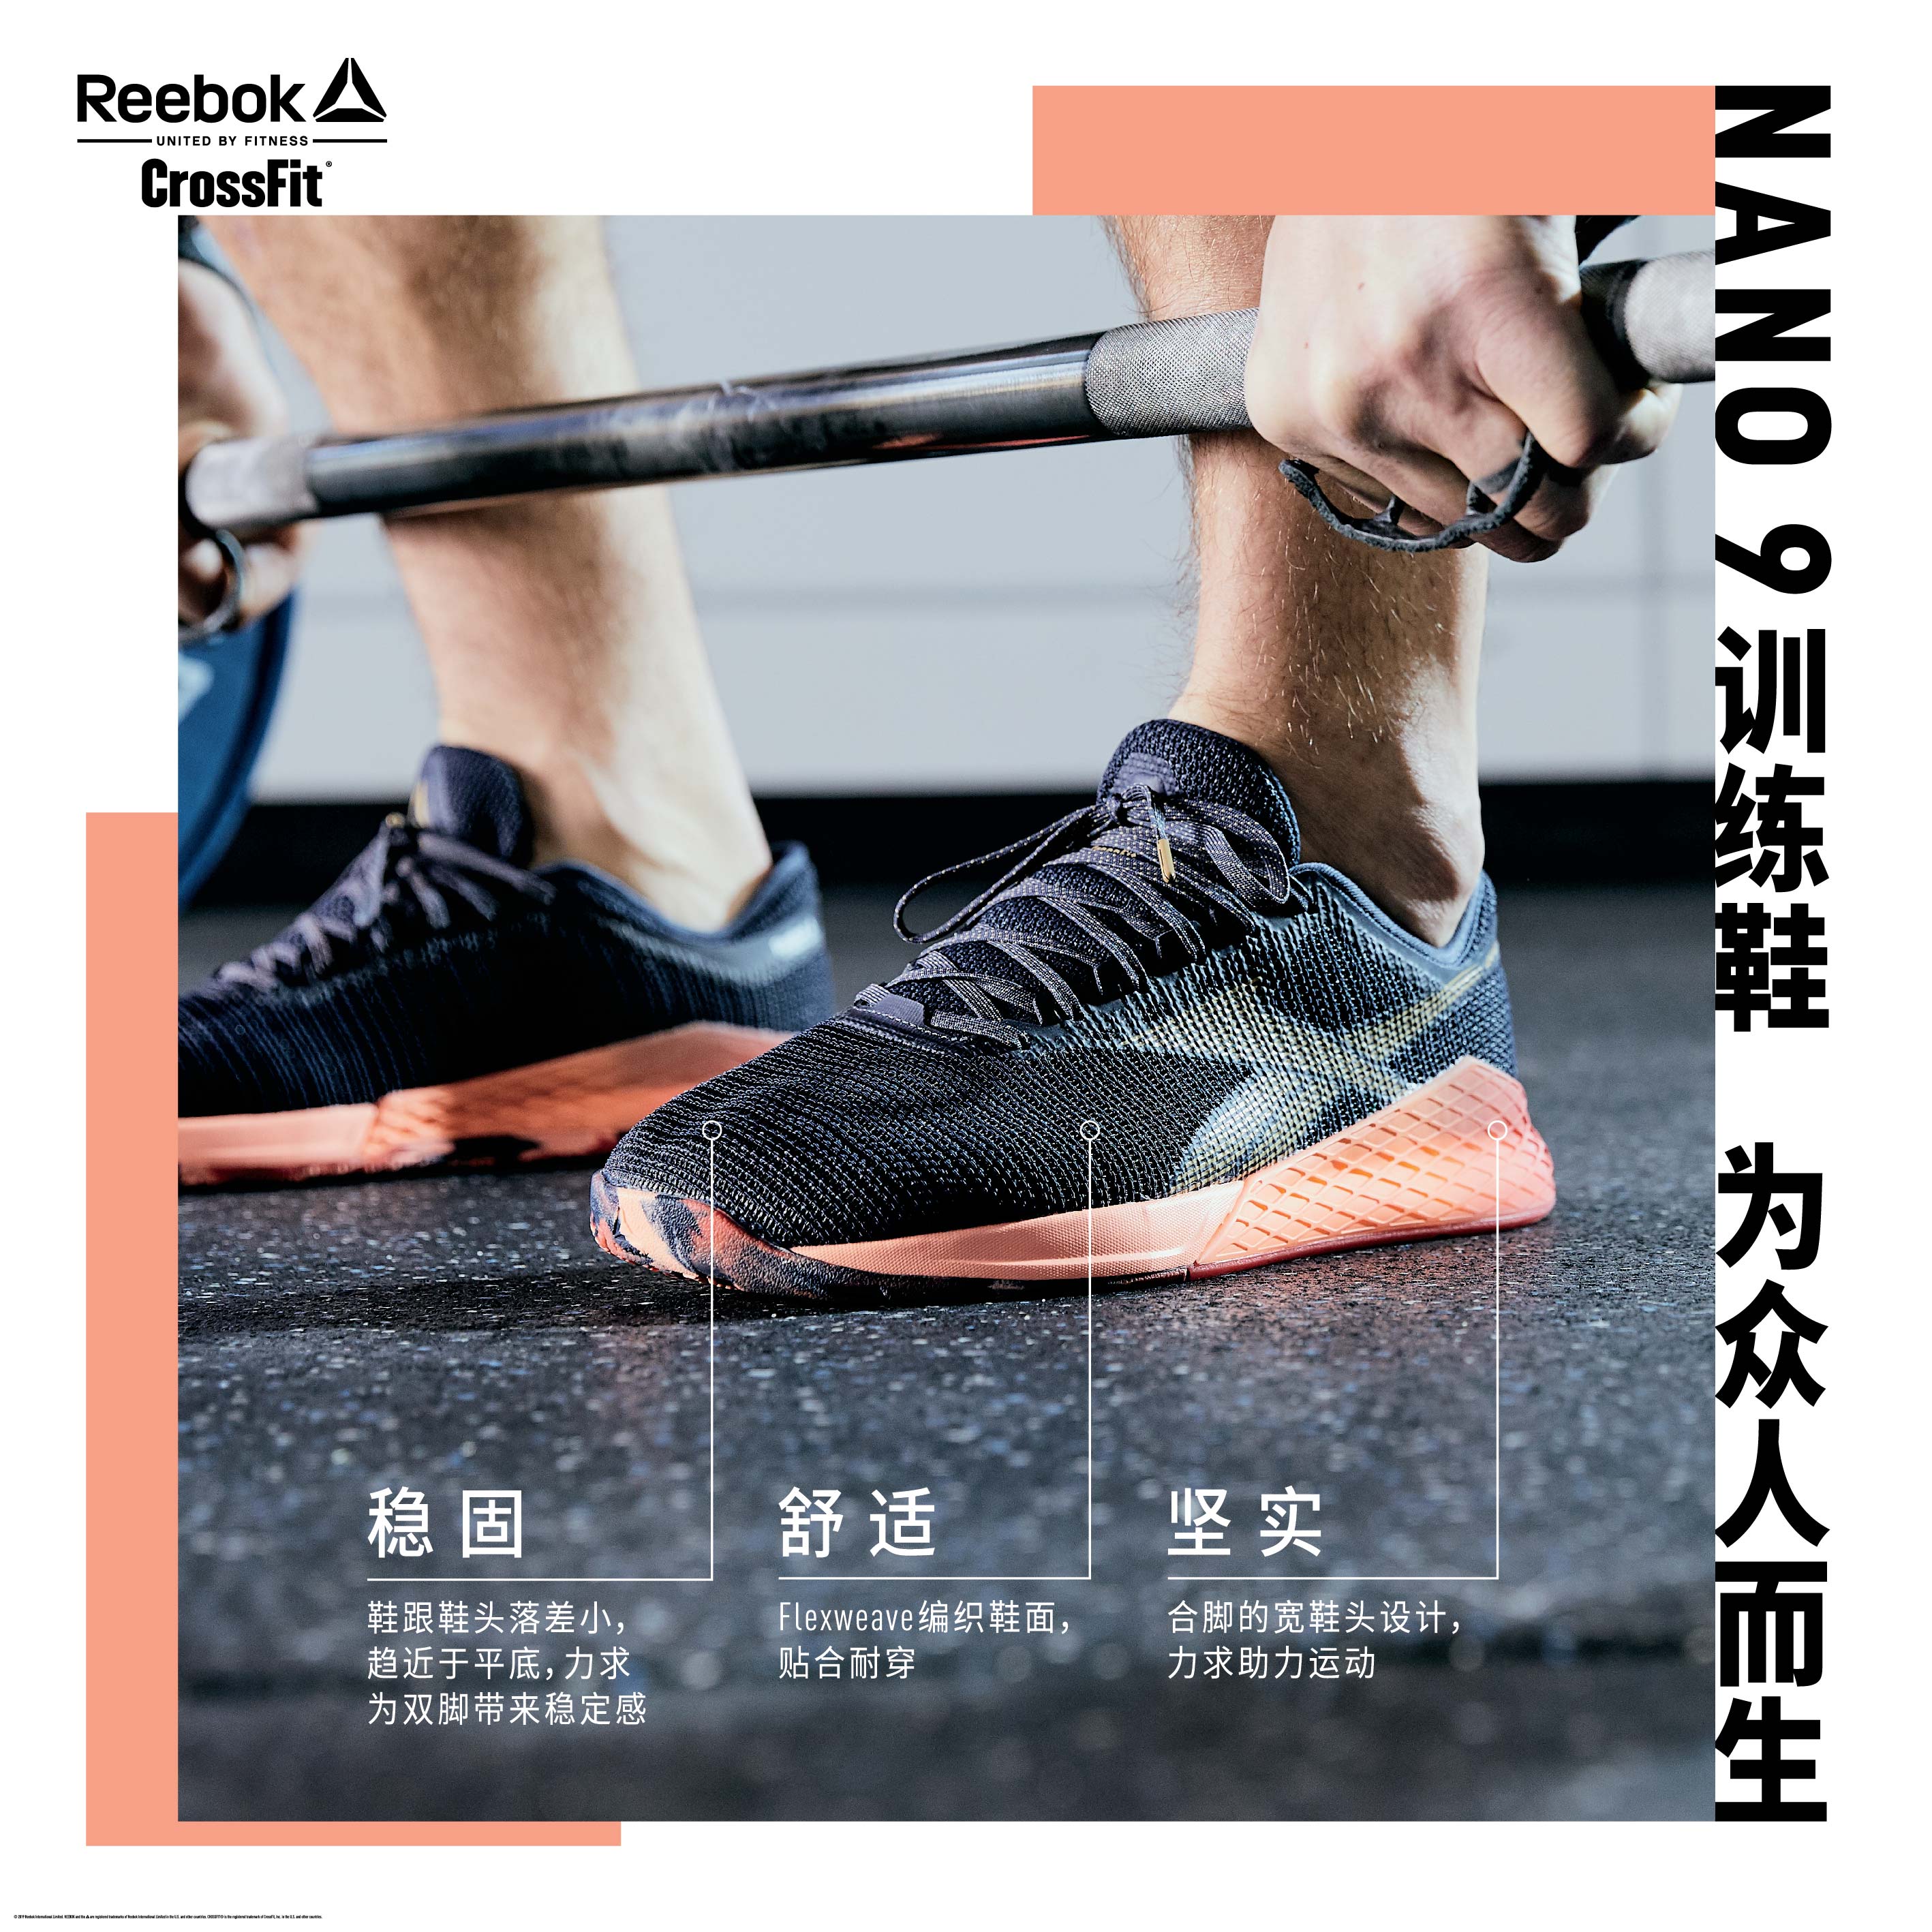 Reebok 全新nano 9系列crossfit再出击 为众人而生 鞋包物语 风尚中国网 时尚奢侈品新媒体平台